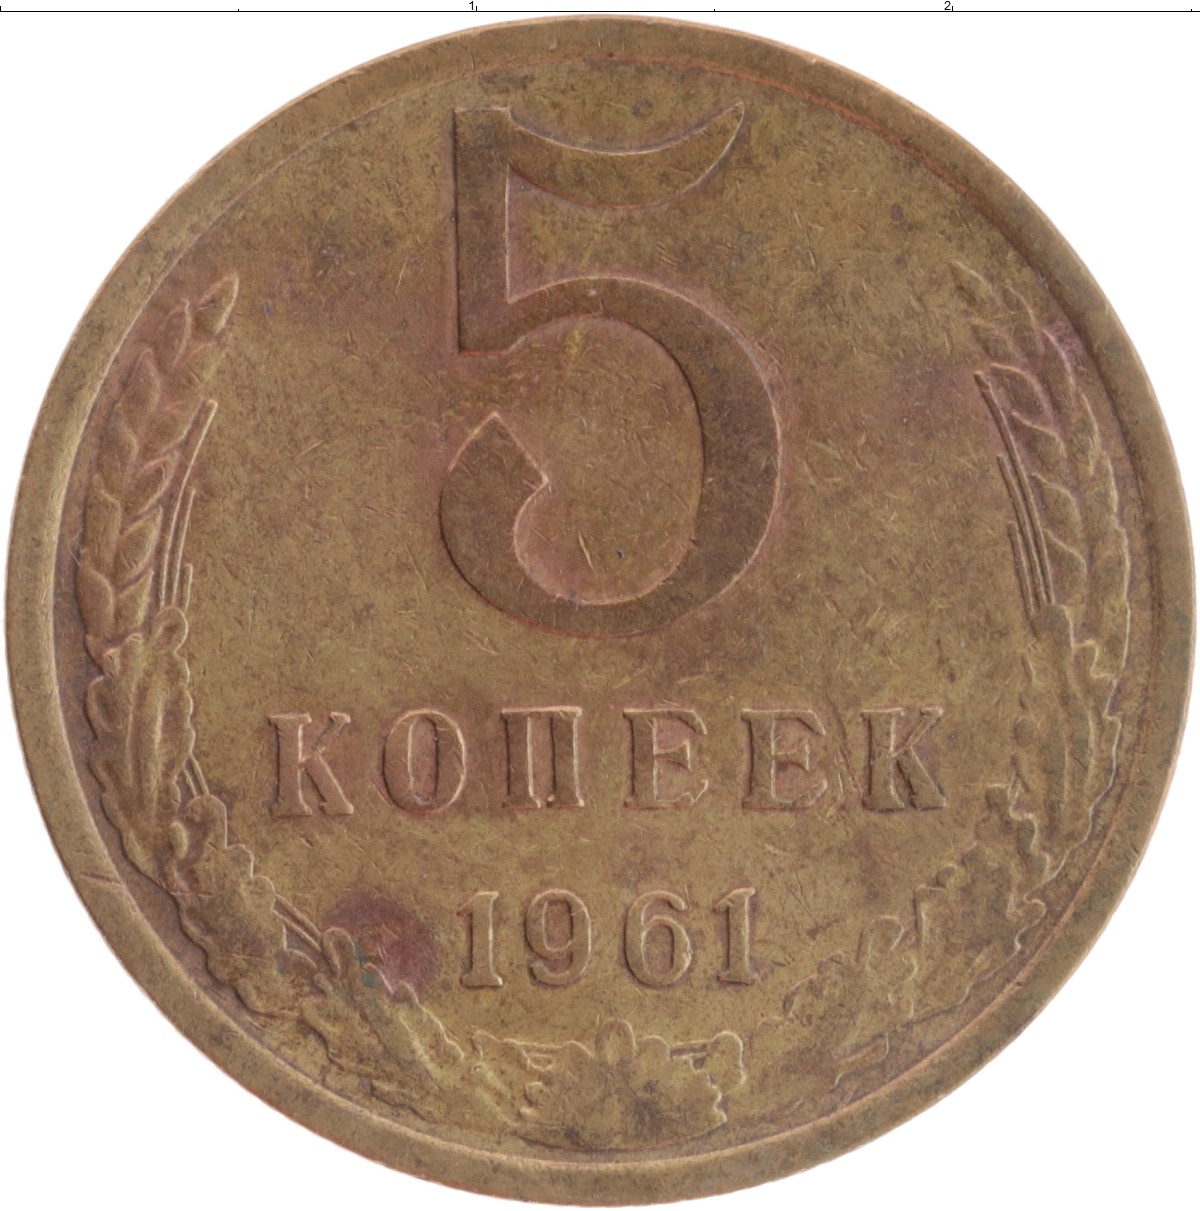 80 рублей 30. Монета 5 копеек 1961. Монета 5 копеек 1961 года. Монета 5 копеек 1961 года СССР. Пять копеек 1961 года.